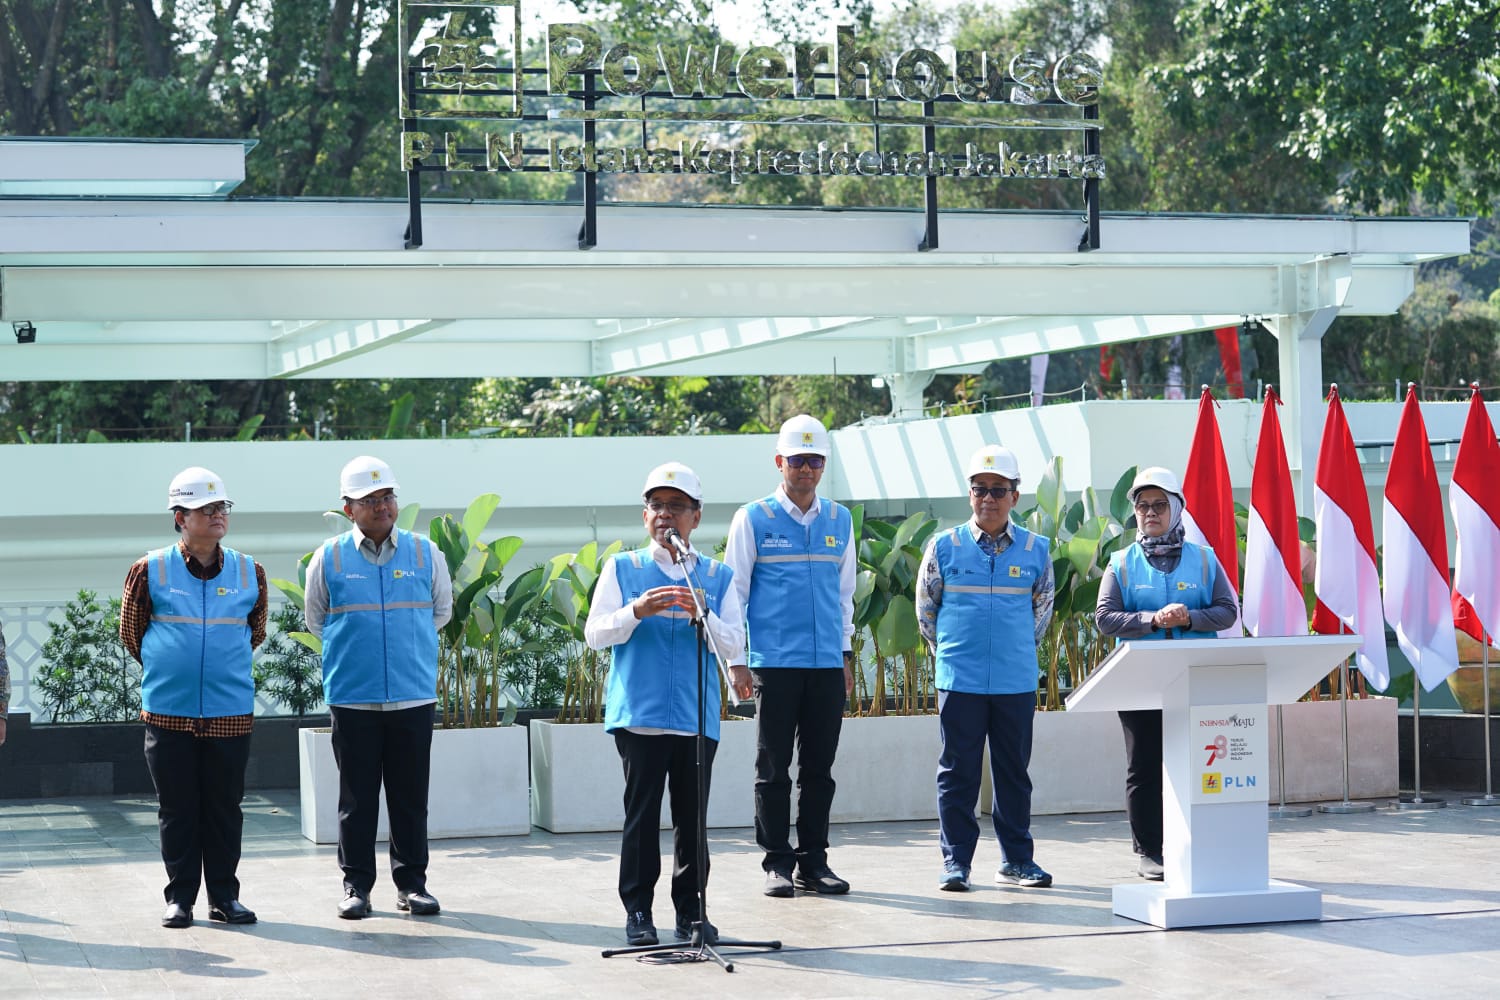 Mensesneg Resmikan Revitalisasi Kelistrikan PLN di Istana Kepresidenan Jakarta 